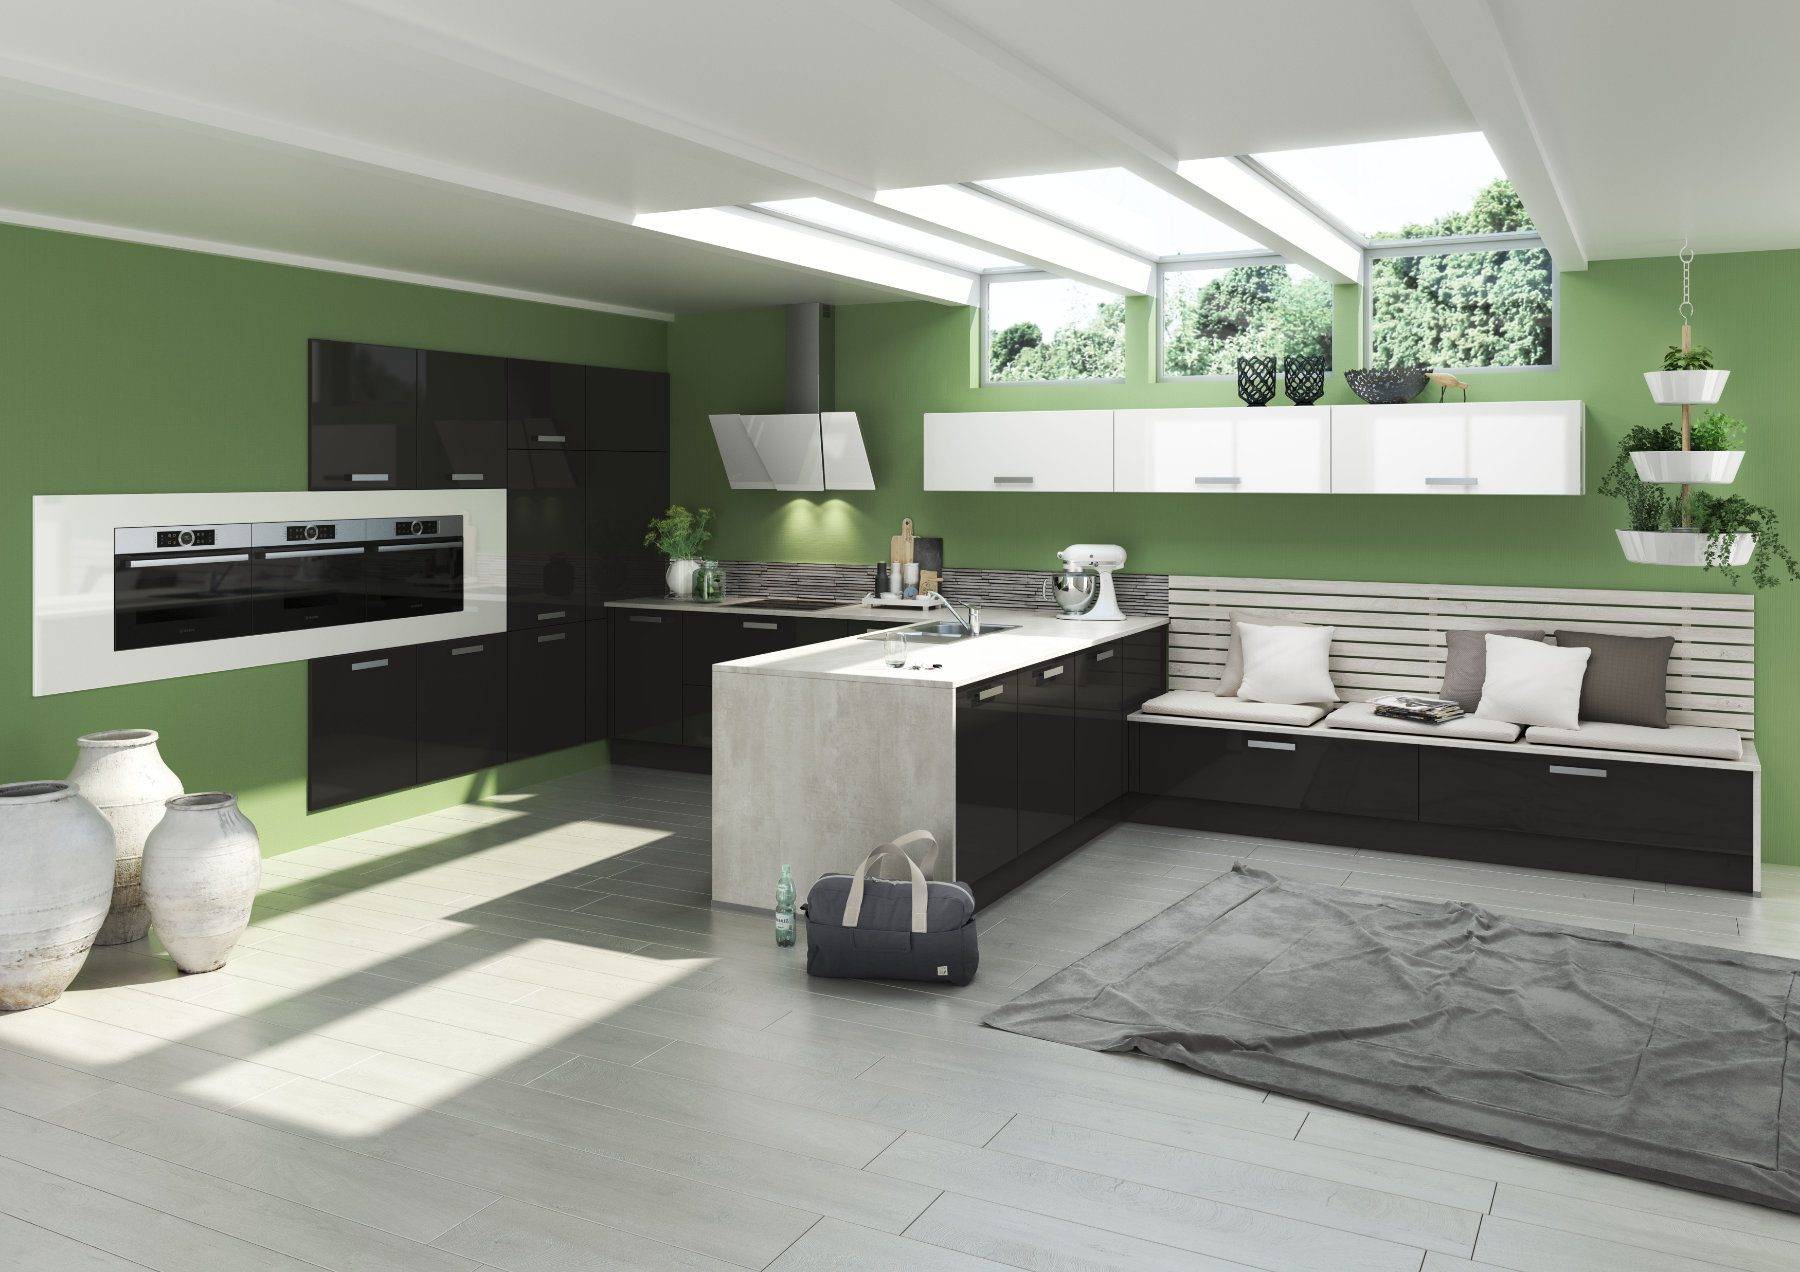 Bauformat Monochrome Gloss Kitchen With Lime Green Wall | Torben Schmid Kitchens, Truro